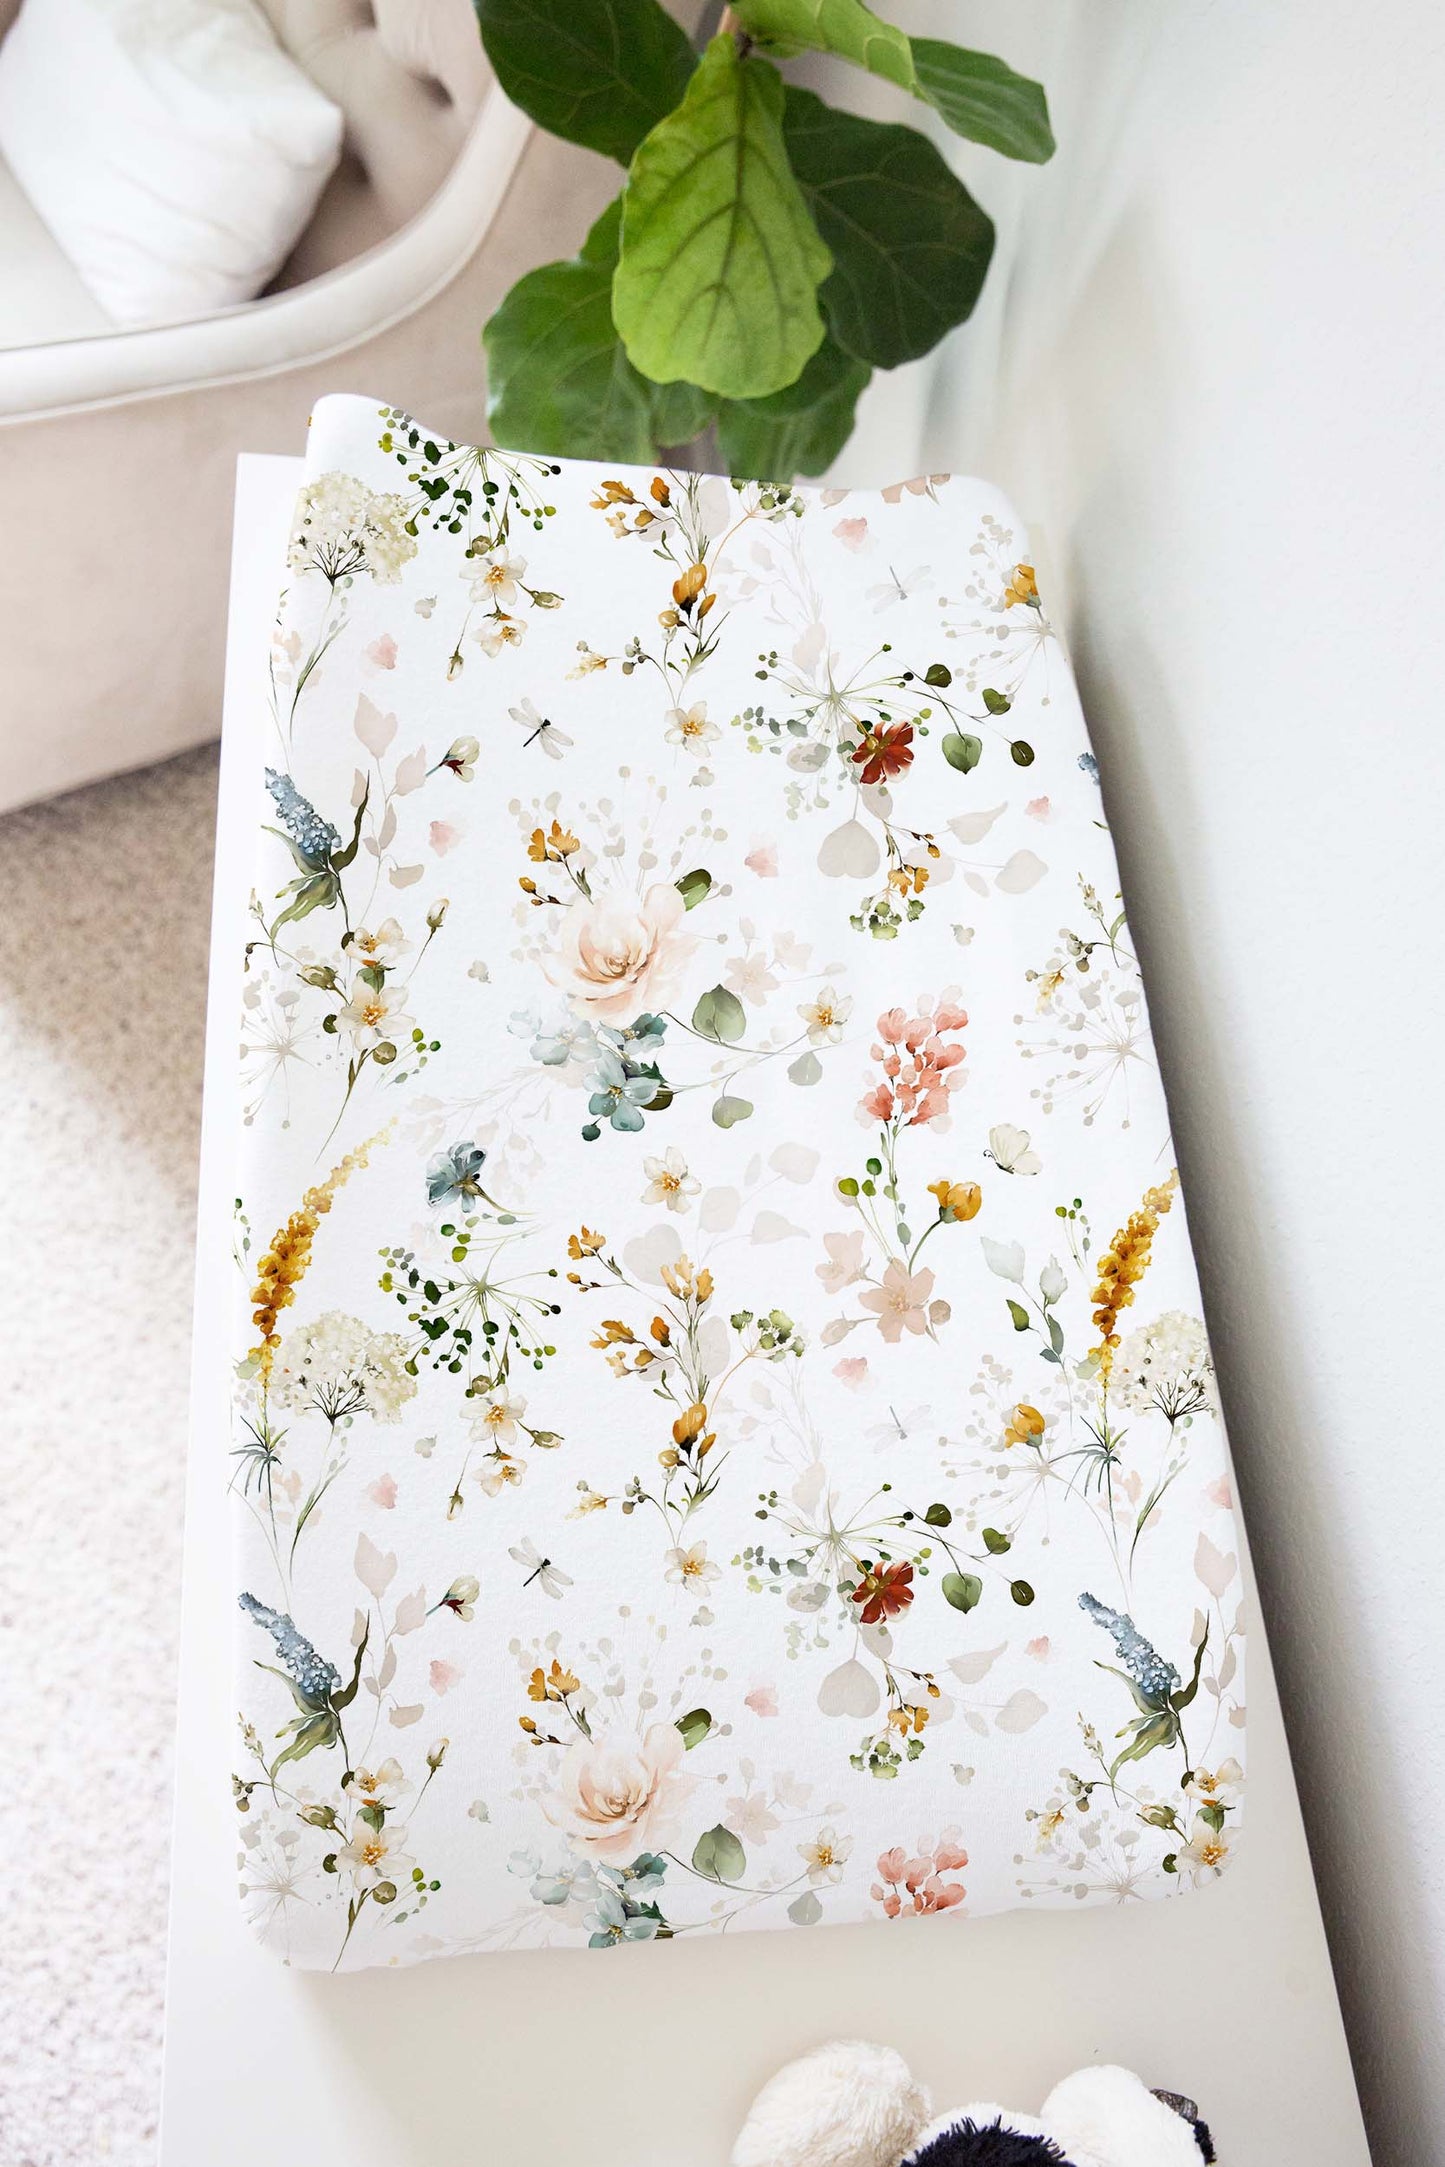 Wild Flower Nursery Bedding, Boho Floral Changing Pad Cover - Vintage Garden